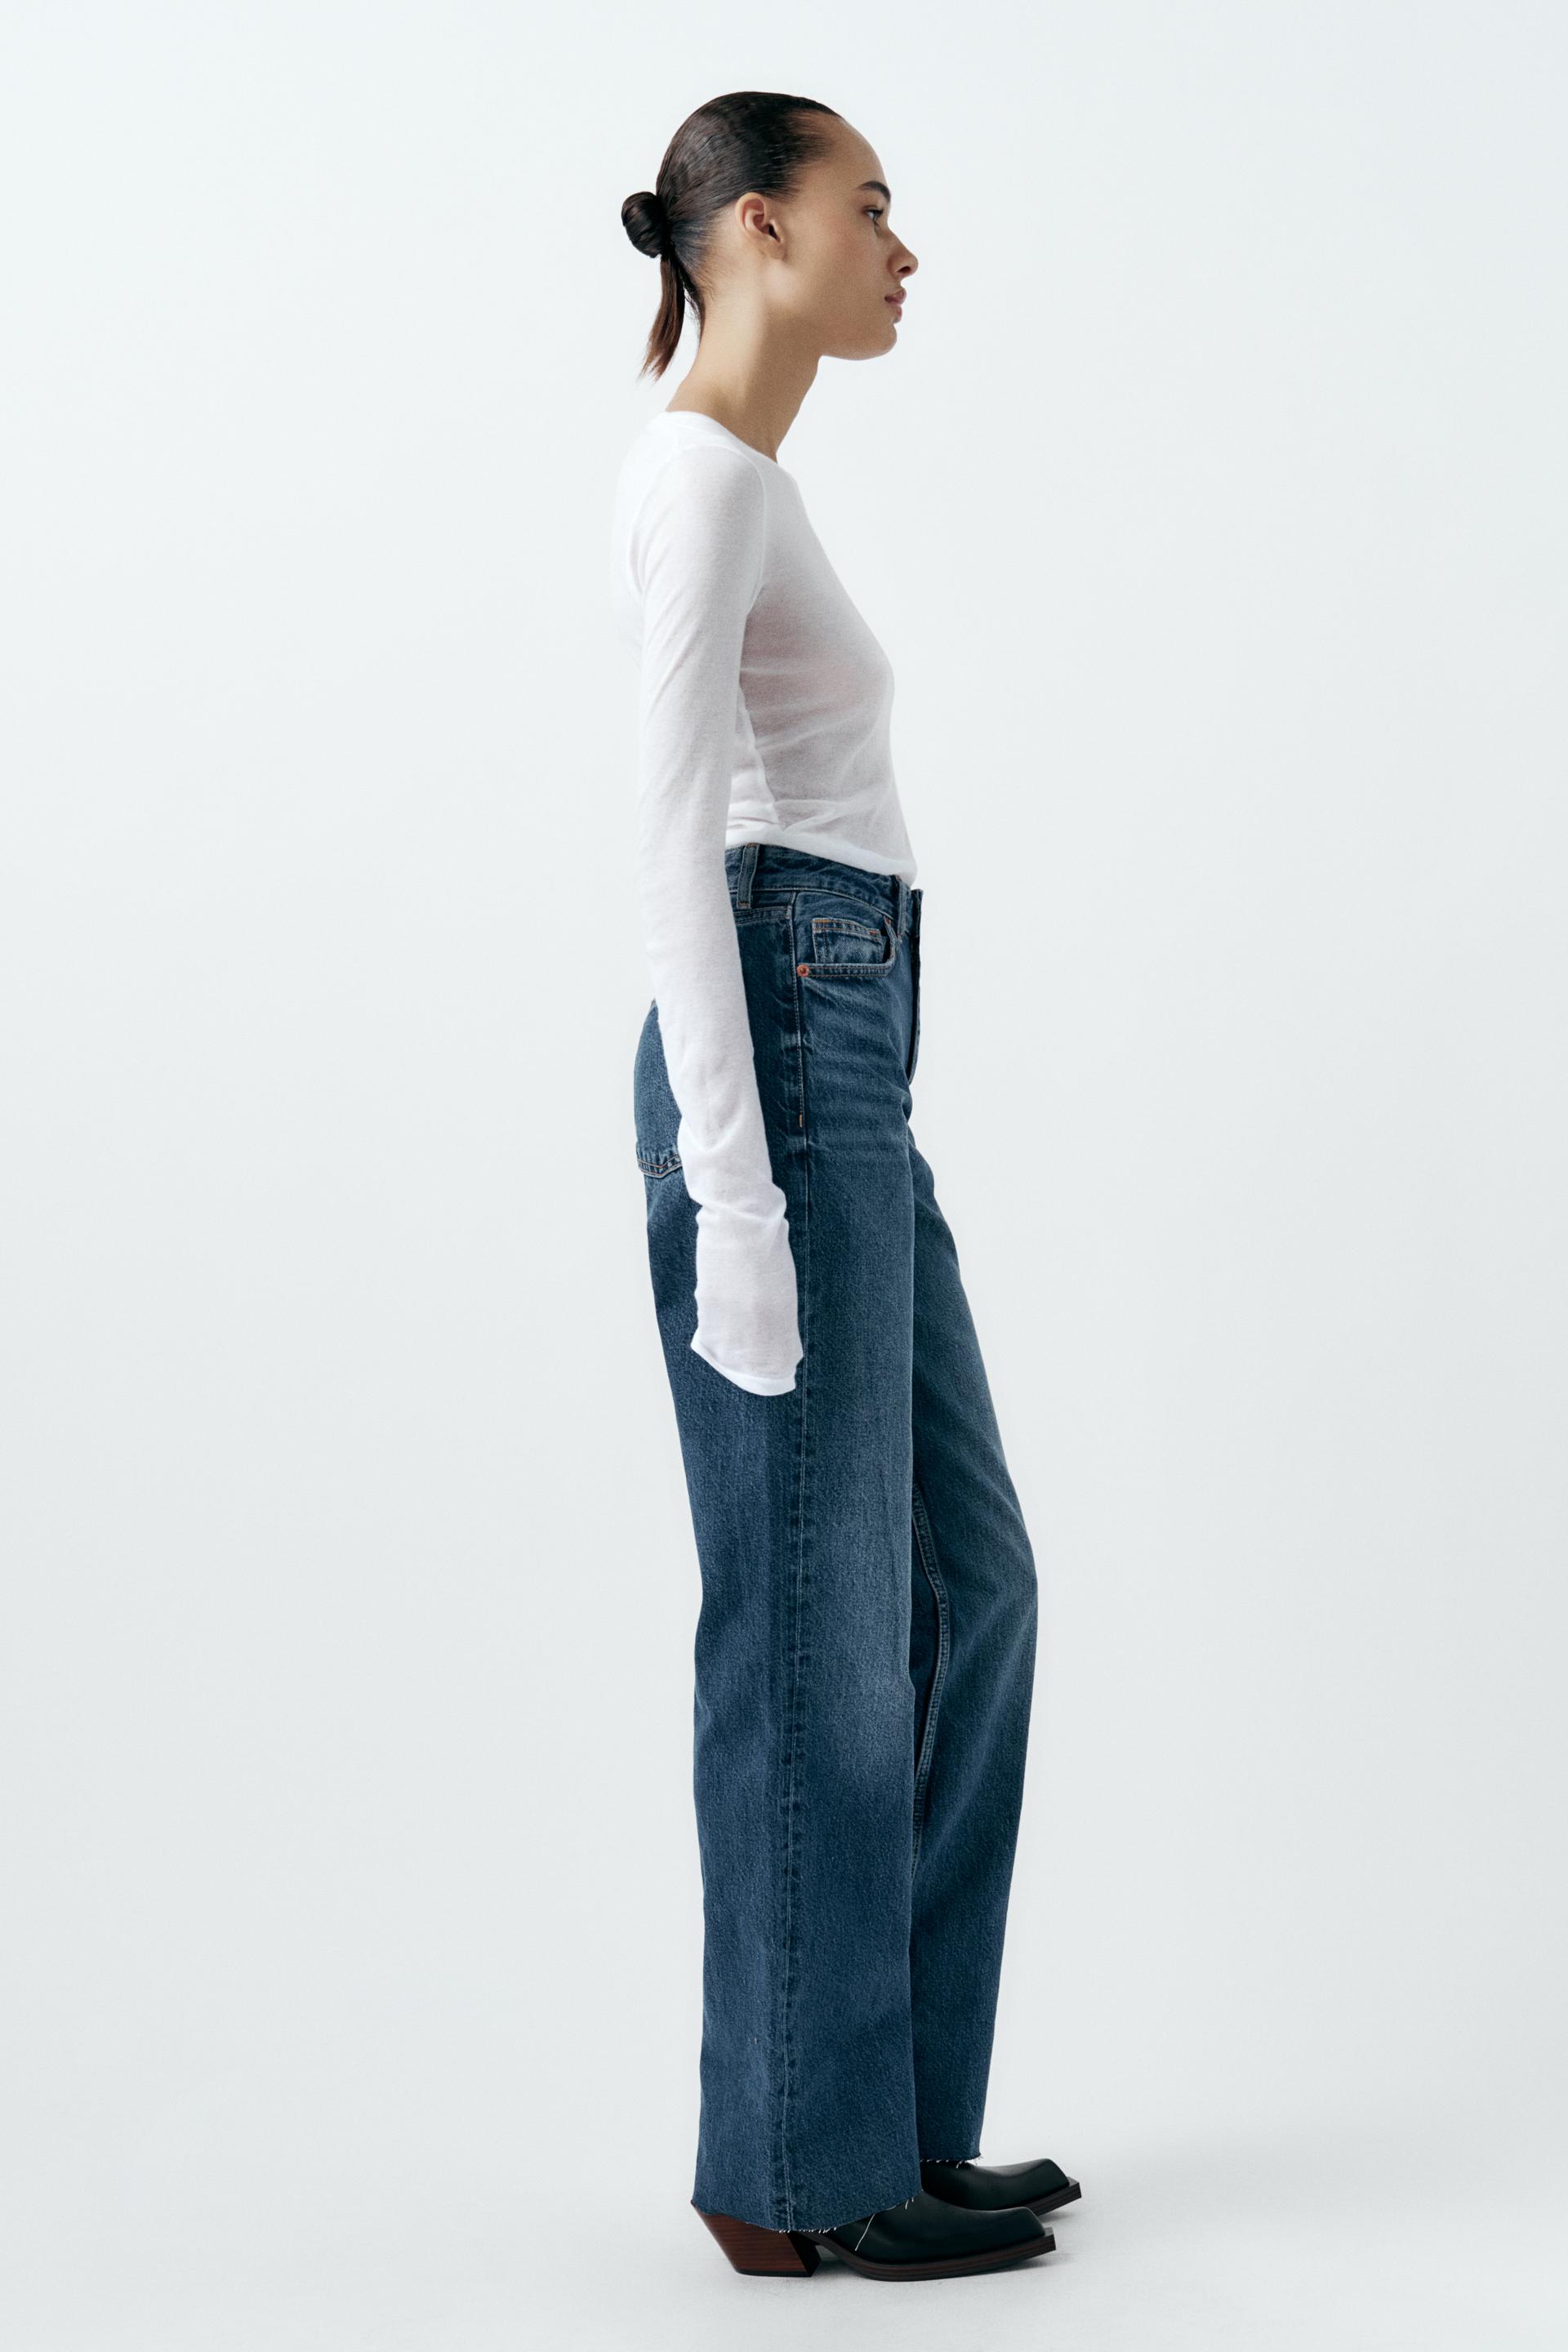 ZARA High-Rise Stove Pipe TRF Jeans, Women's Fashion, Bottoms